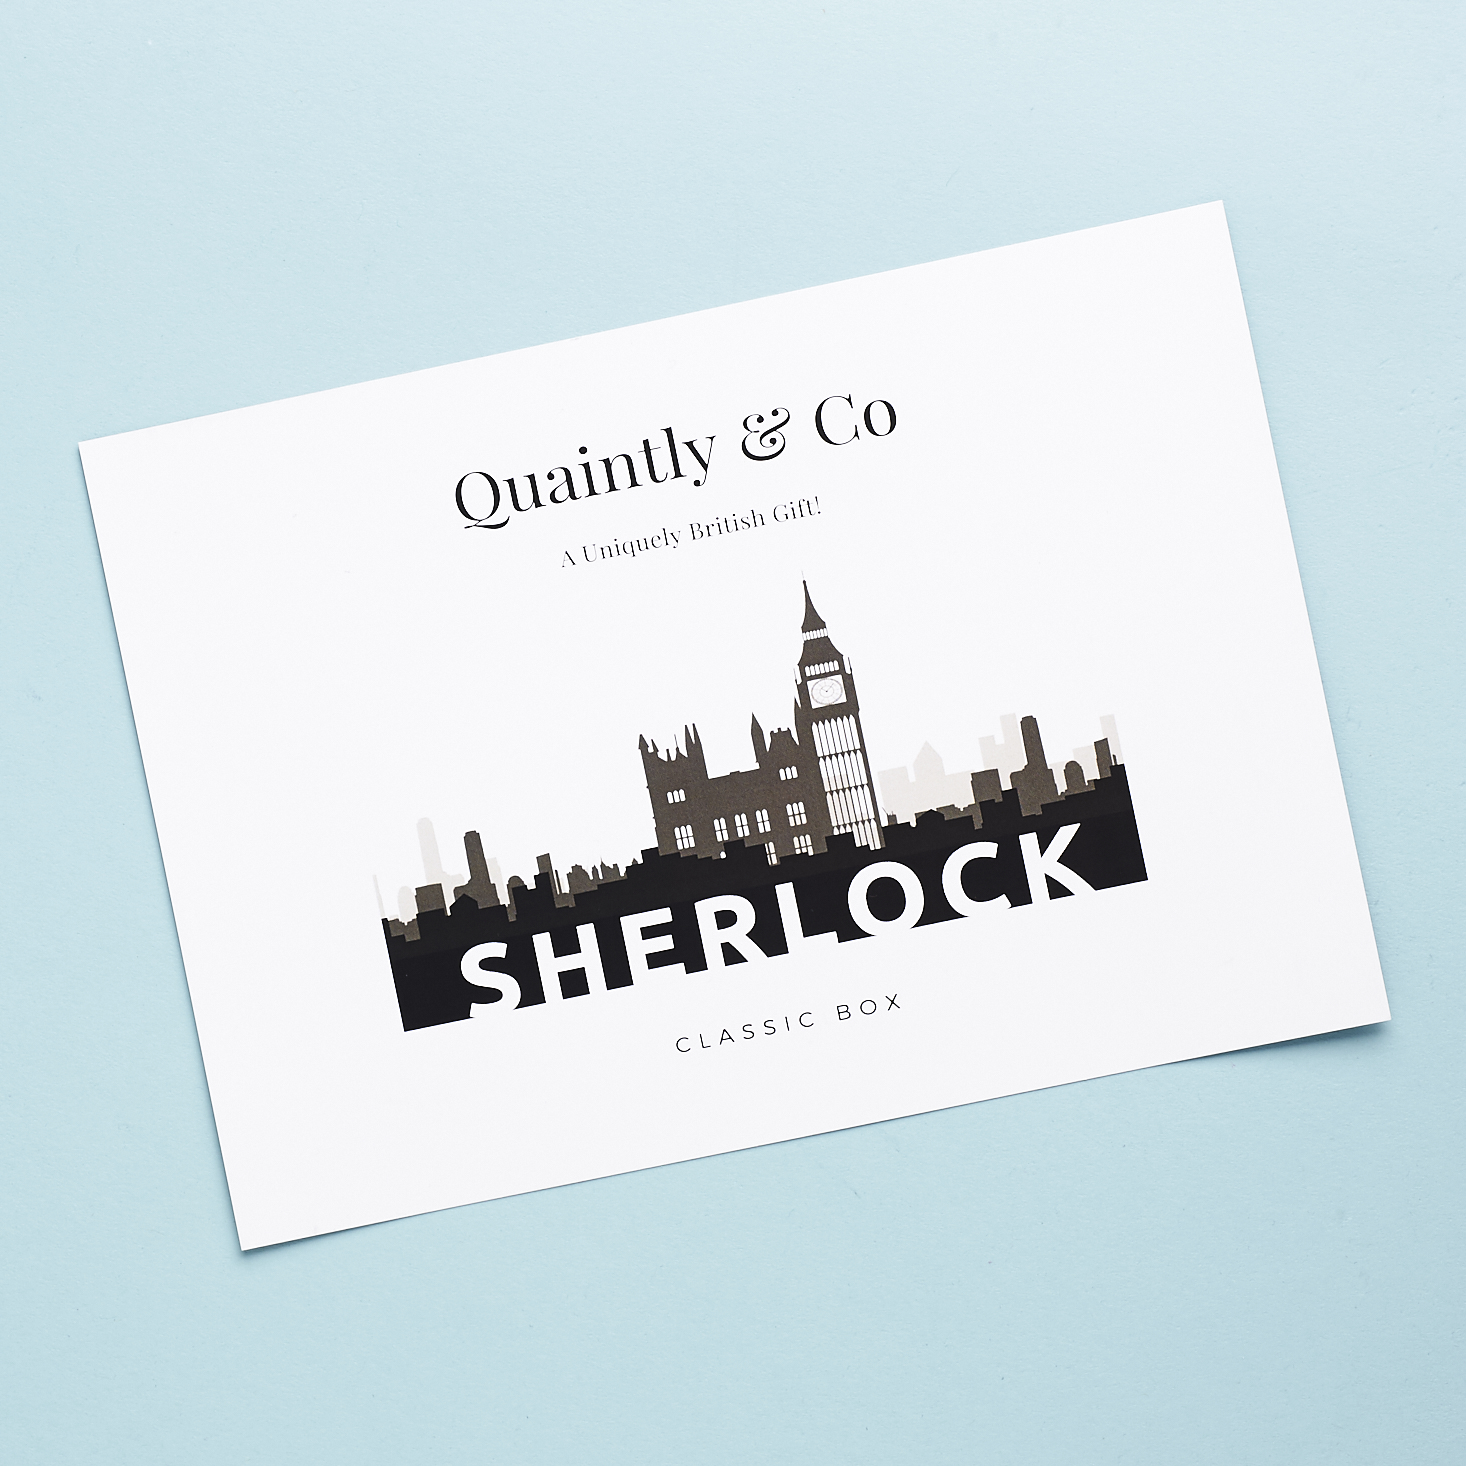 Check out Quaintly & Co.'s Sherlock box!